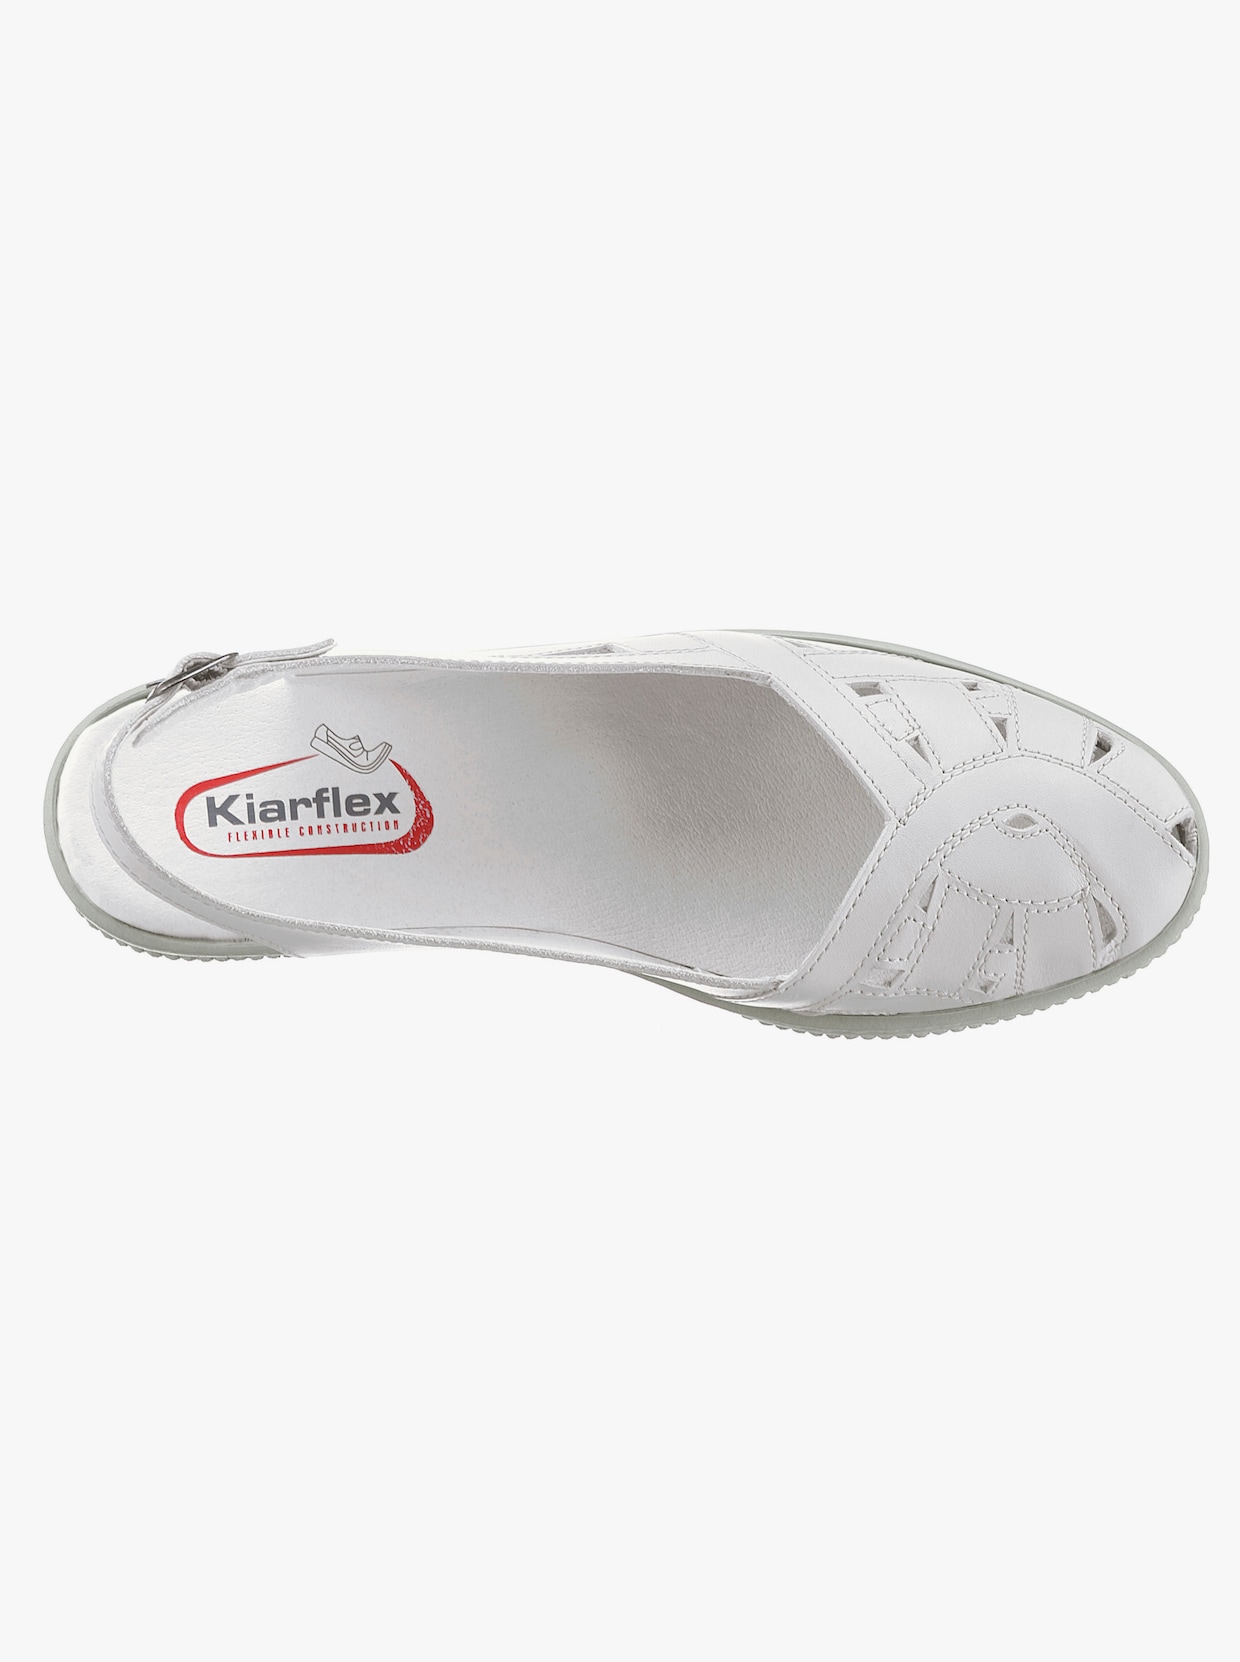 Kiarteflex Sandalette - weiss